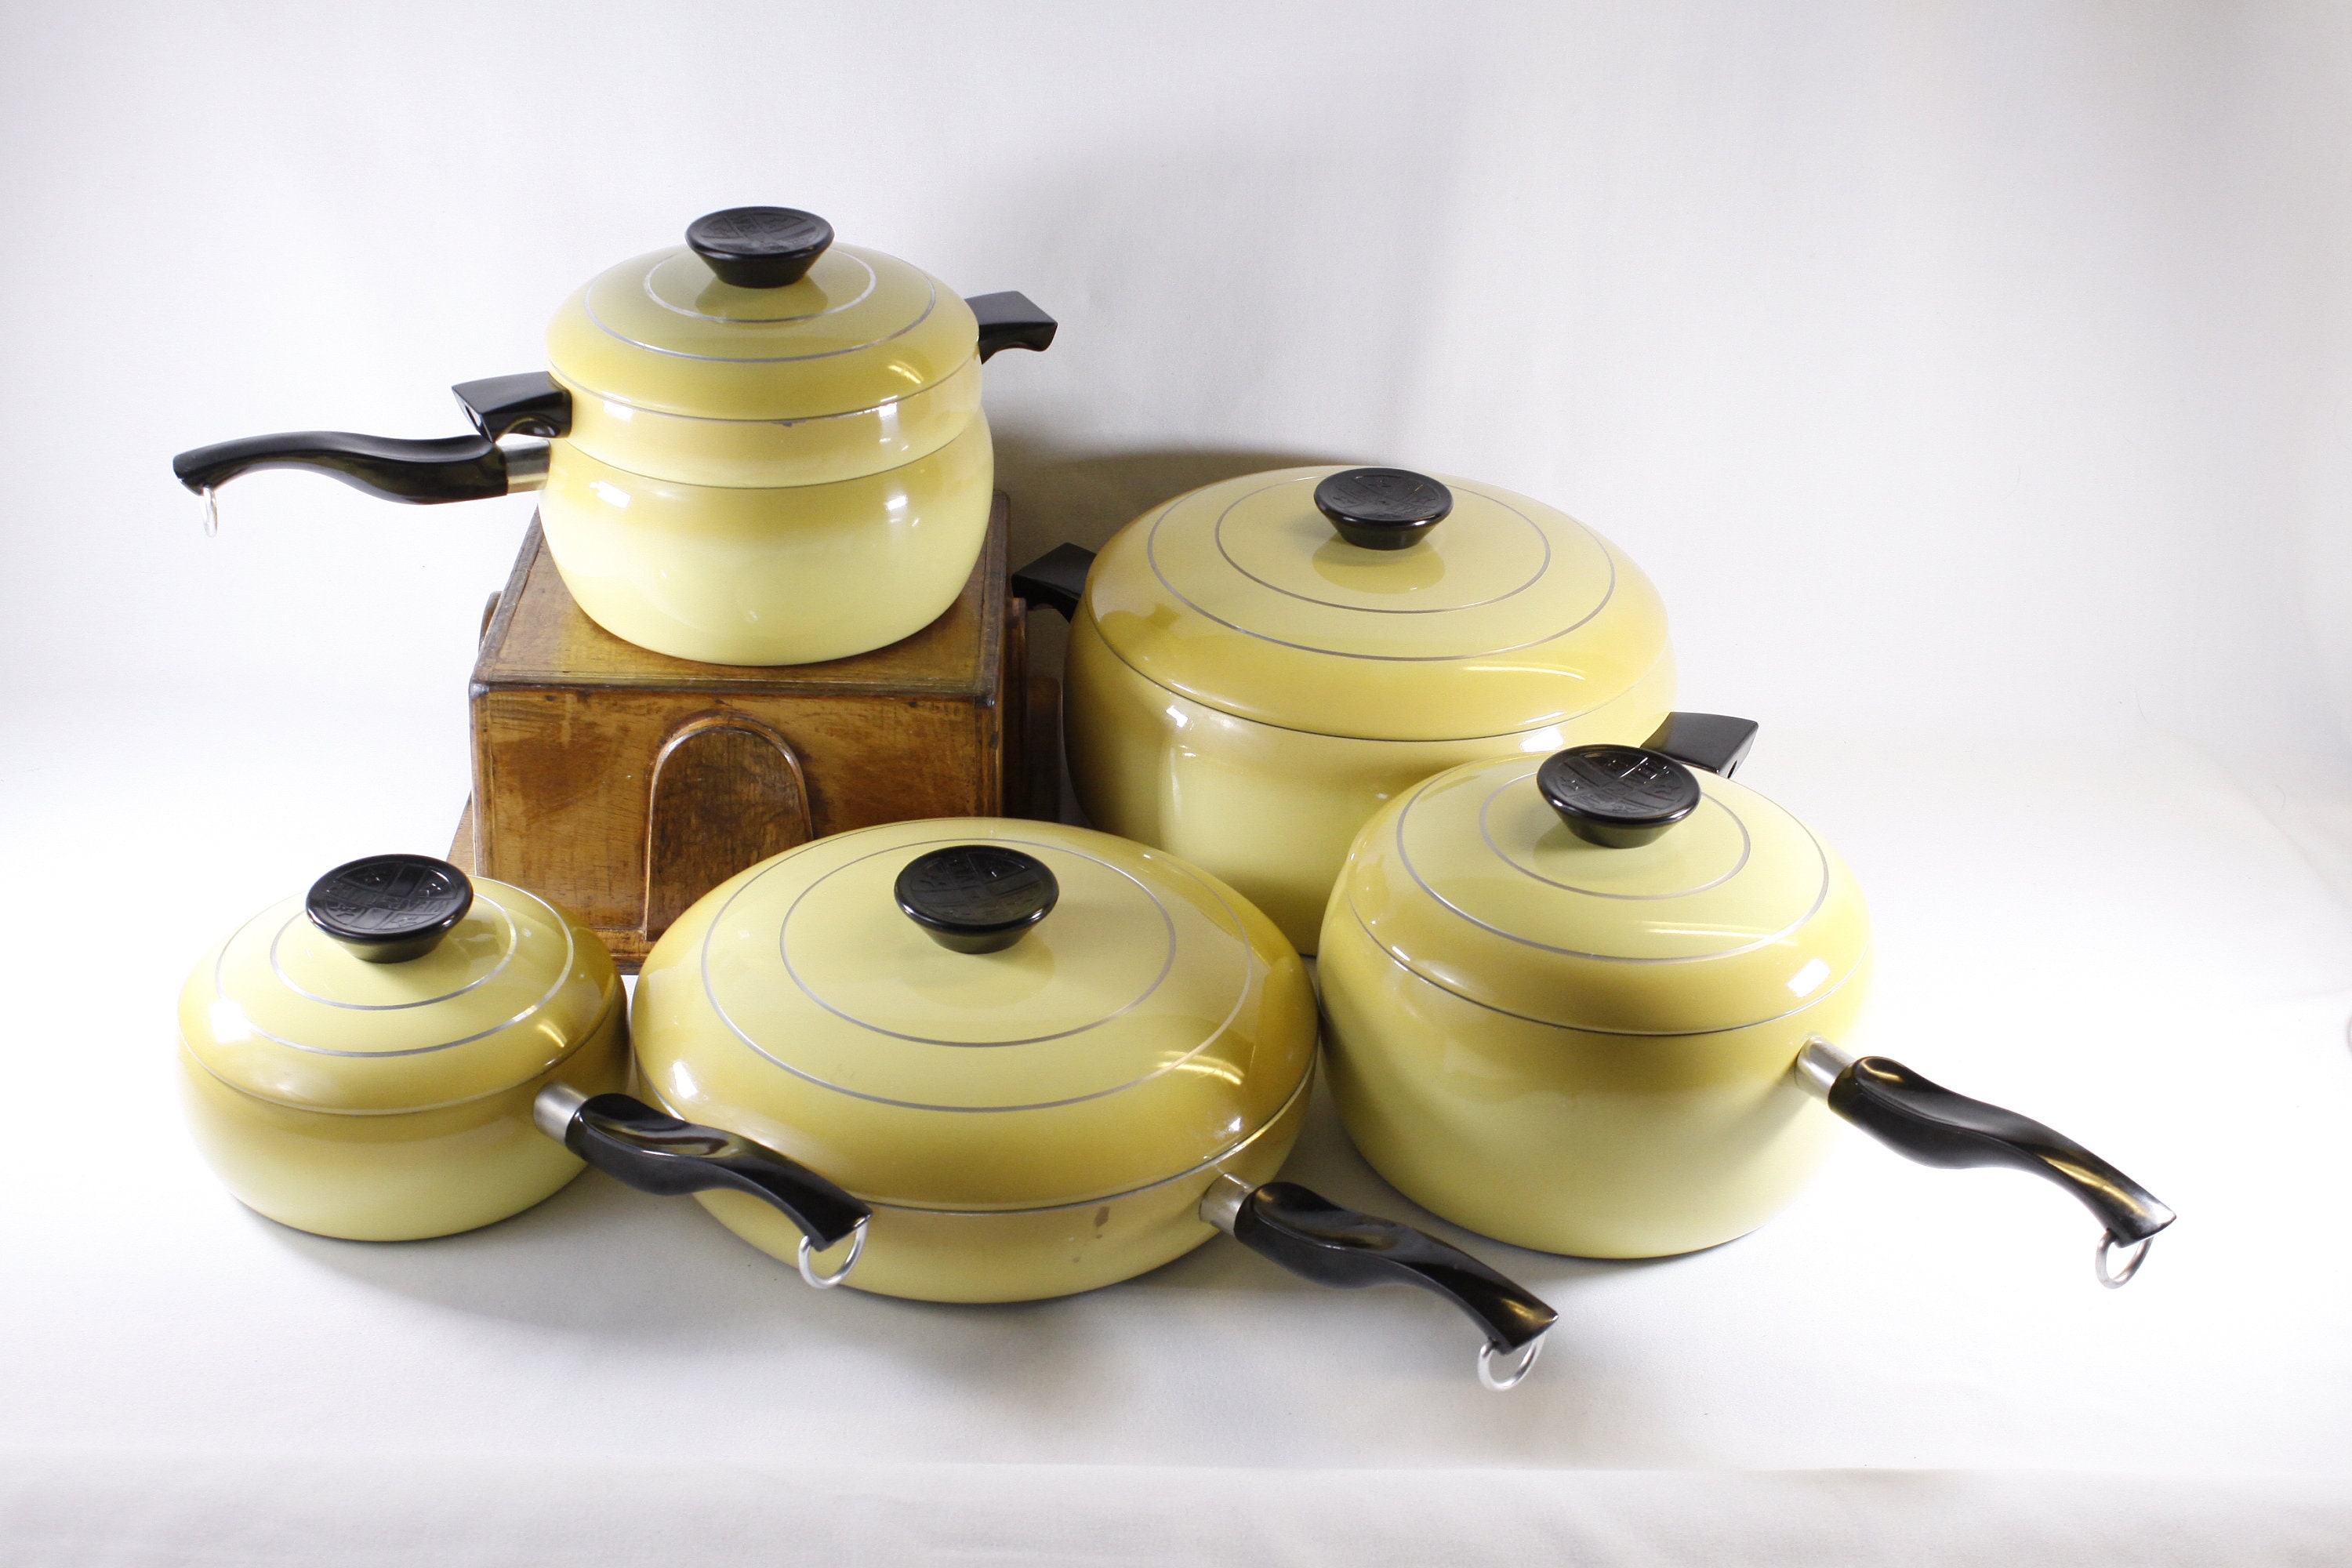 6 Pc. Set Club Aluminum Cookware - Harvest Gold Yellow - 1-1/2 & 2 Quart  Saucepans, 2 Quart Dutch Oven, 6-7 Skillet